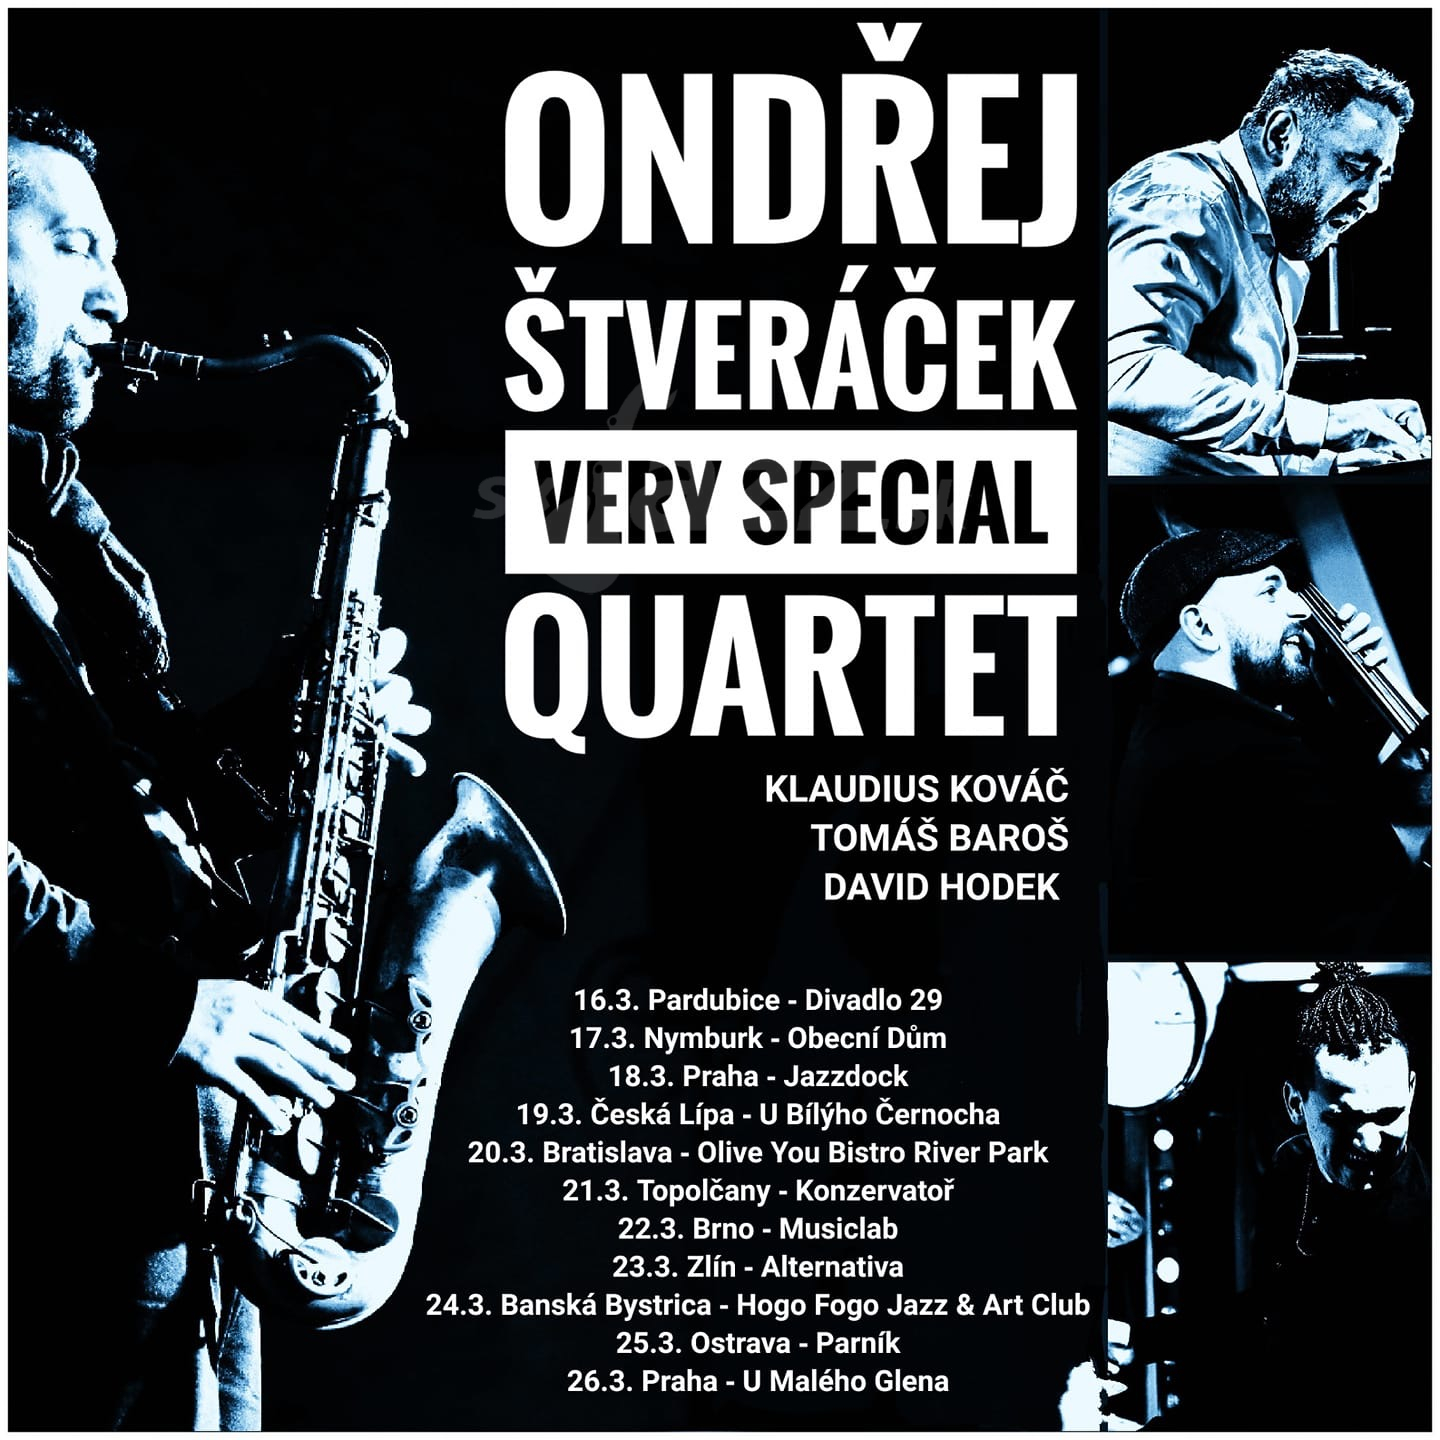 Ondřej Štveráček Very Special Quartet - Tour !!!